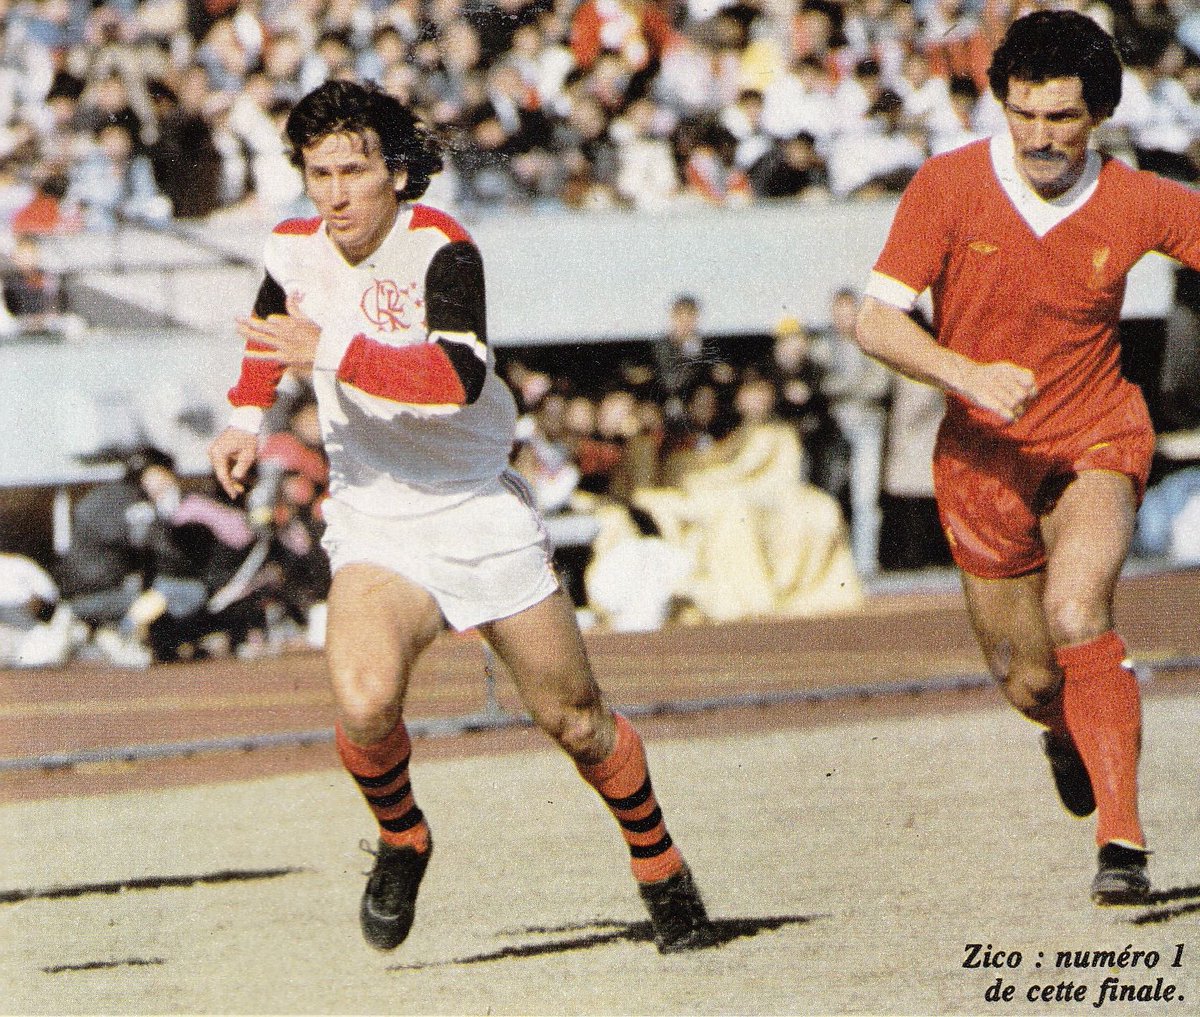 #Zico #GraemeSouness, December 13, 1981, #Intercontinental Cup, #Flamengo #Liverpool